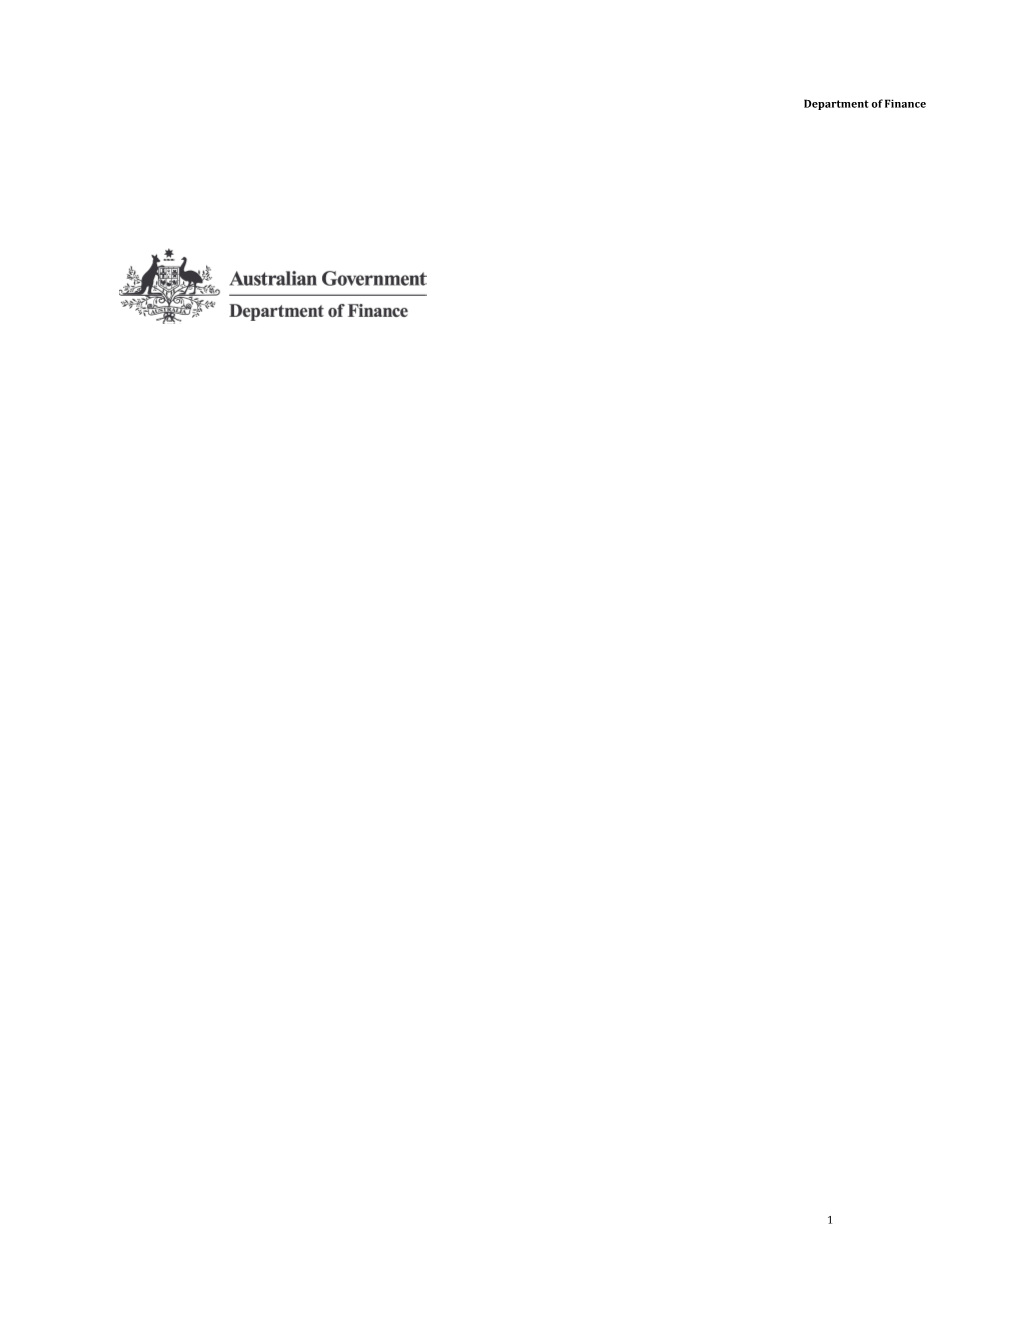 Australian Government Assurance Reviews